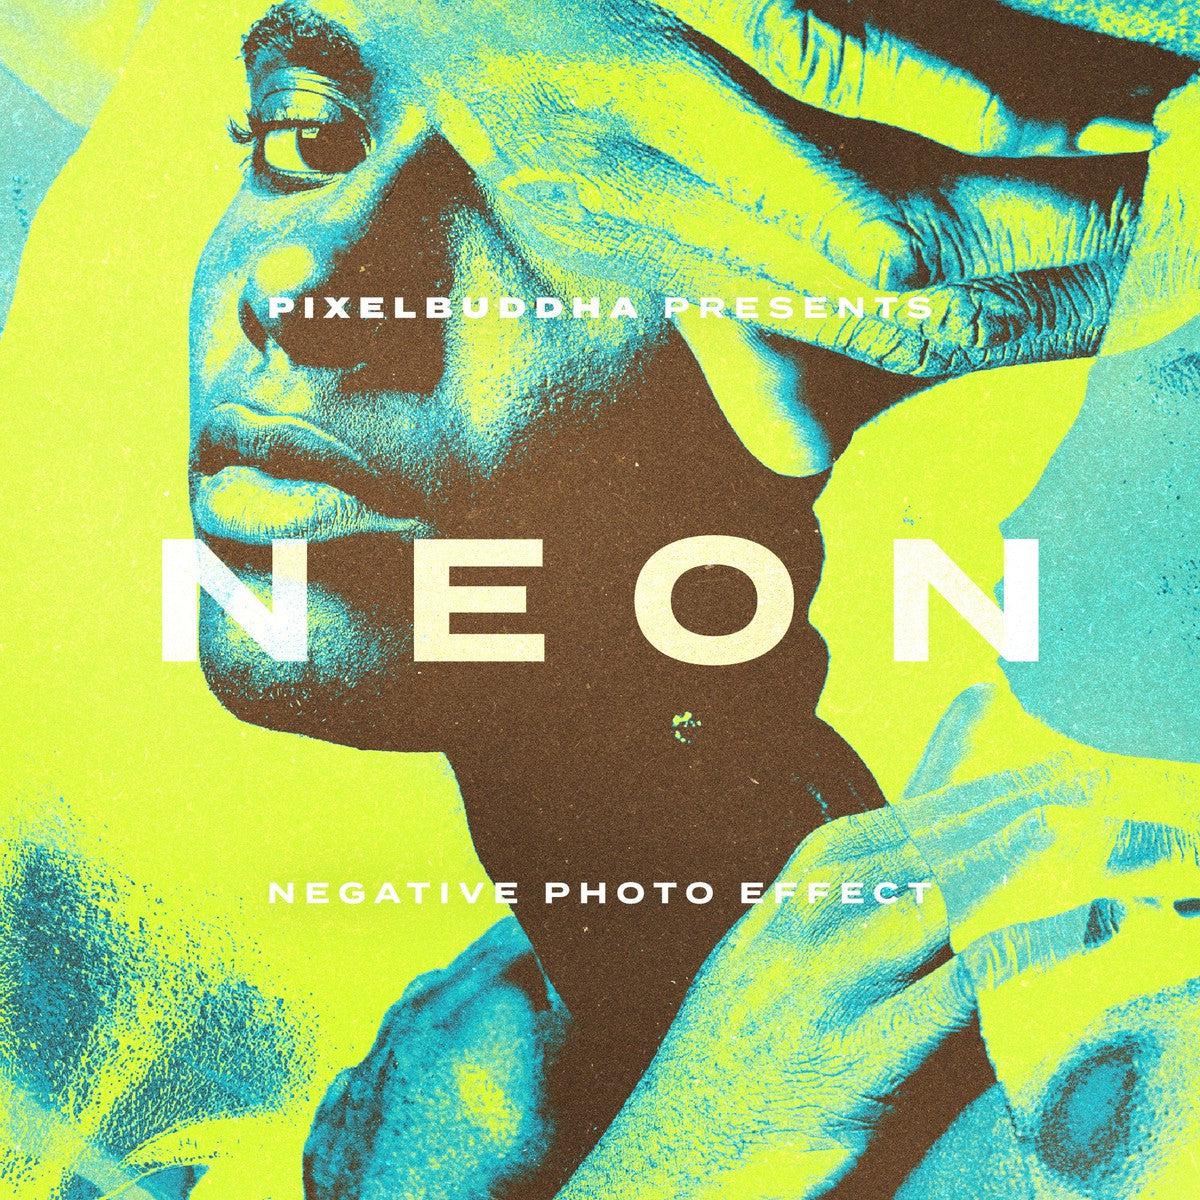 Neon Negative Photo Effect